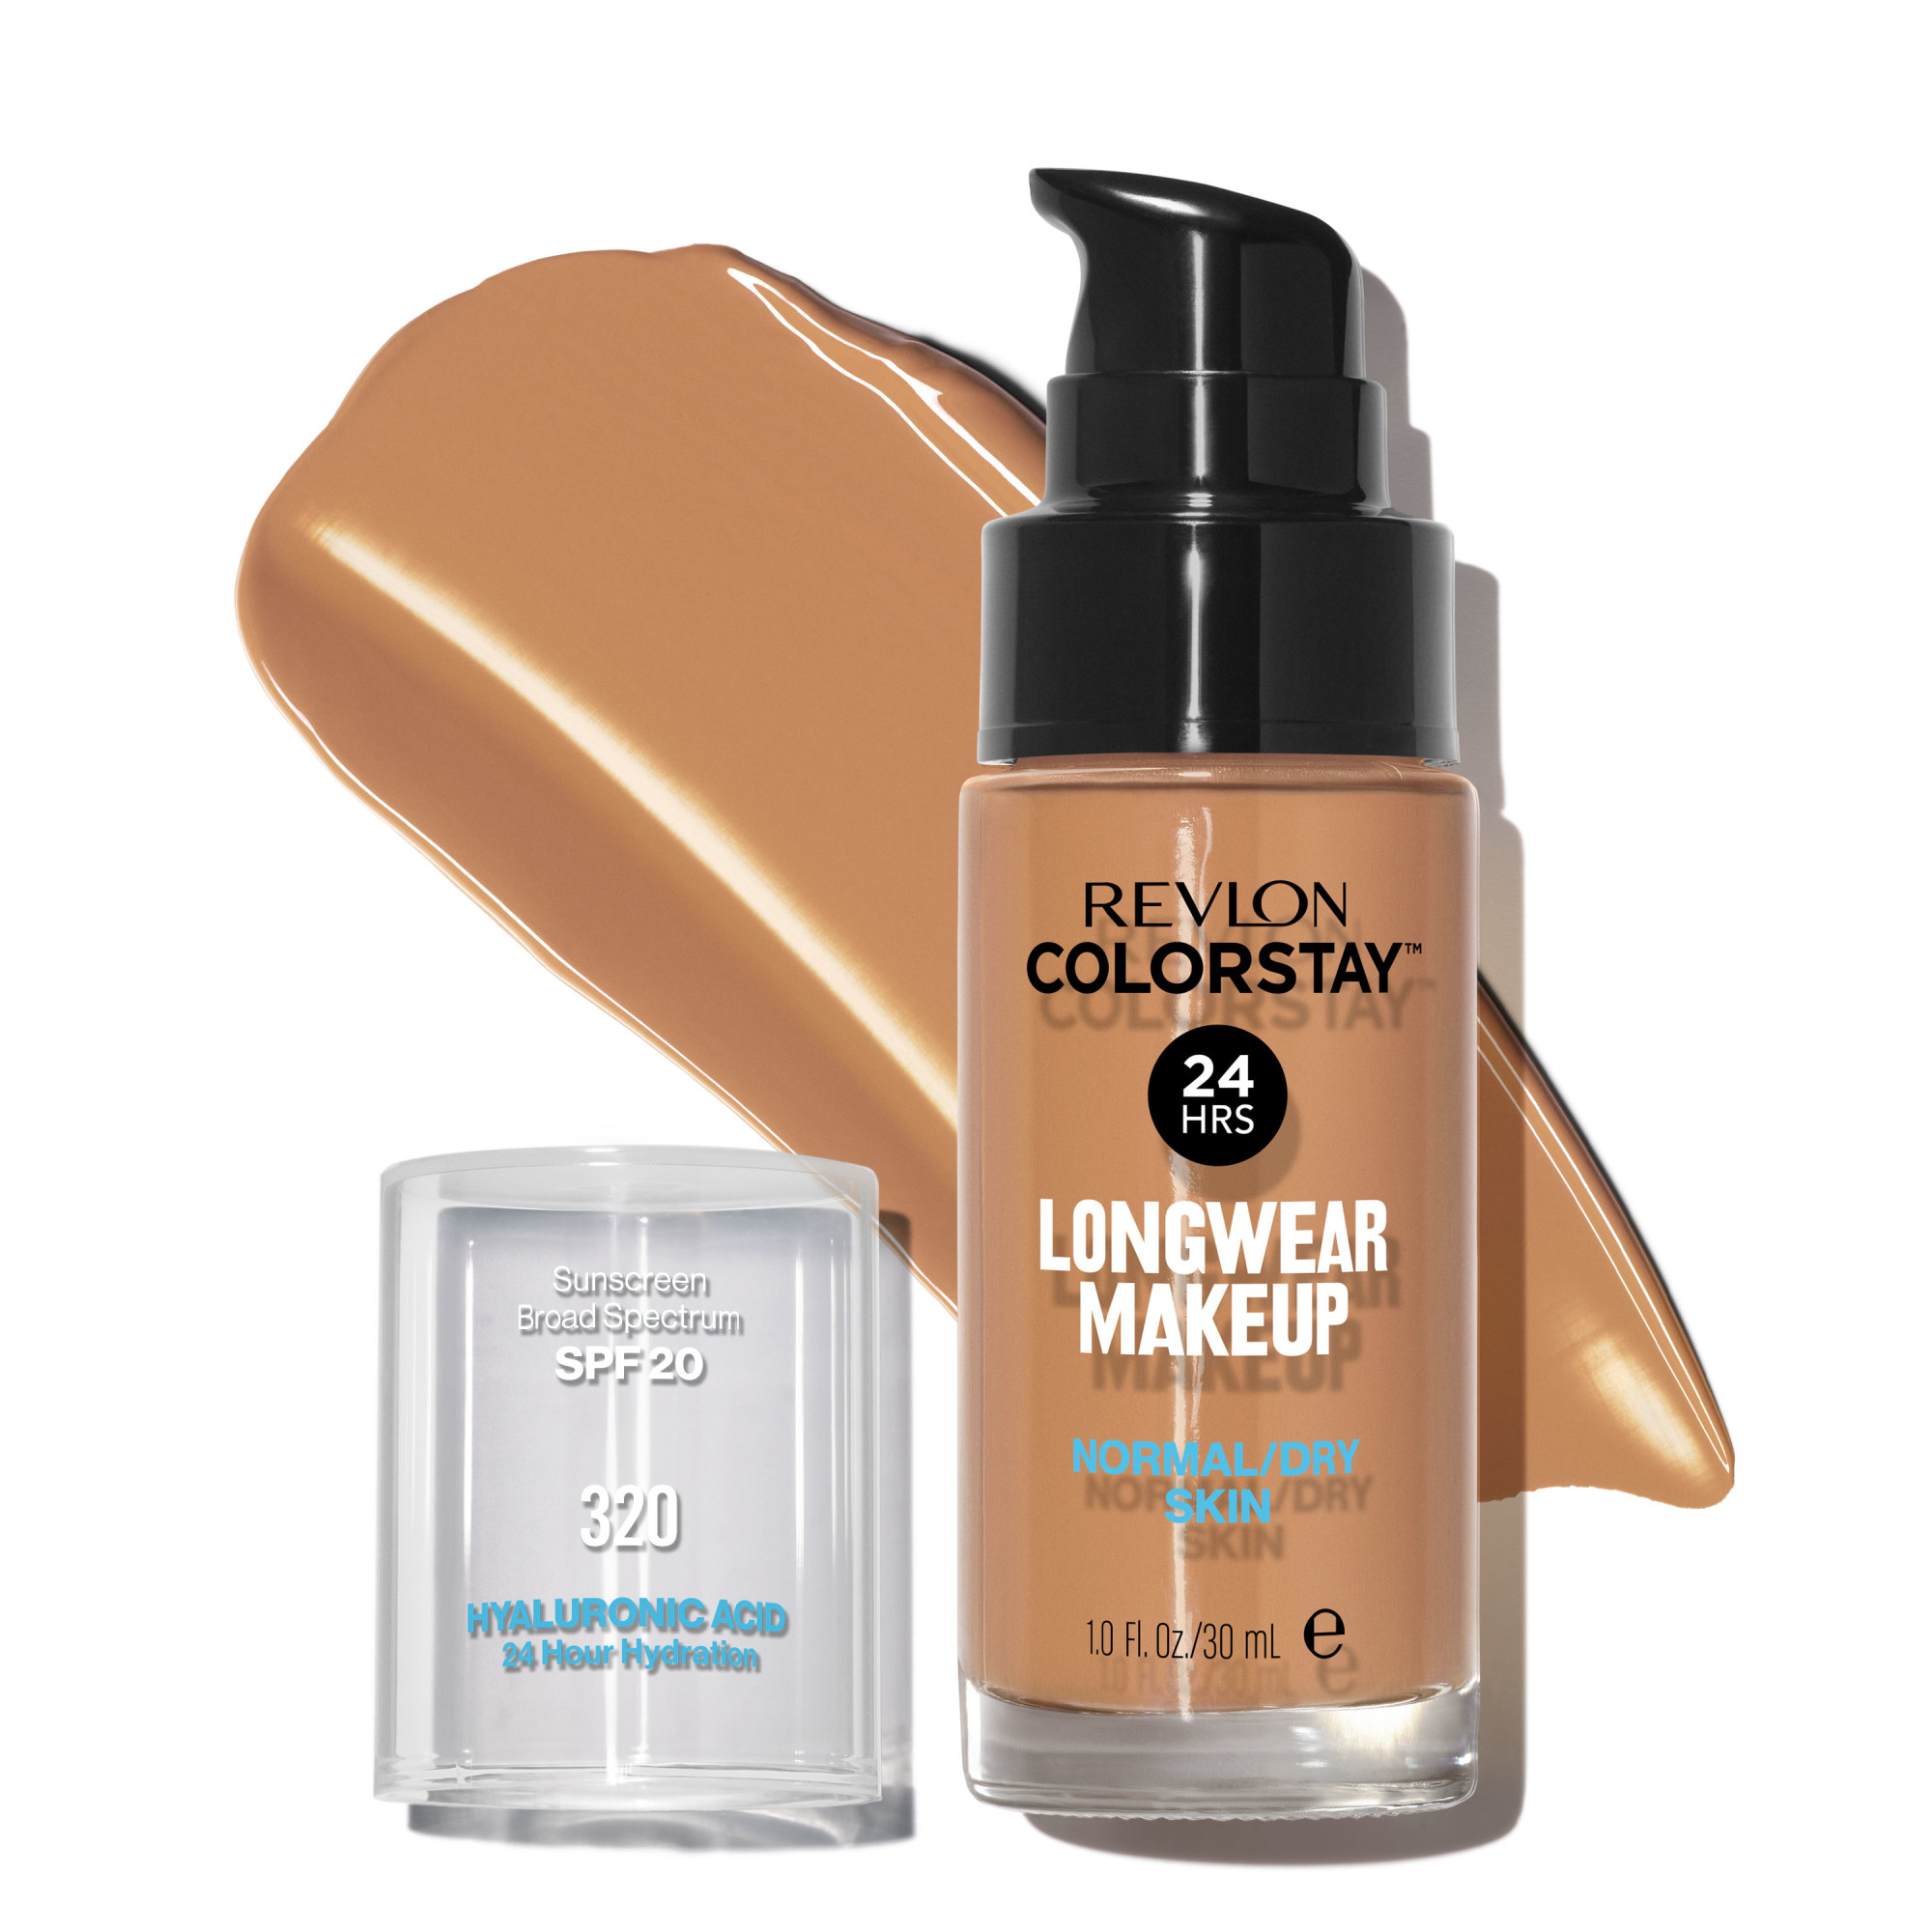 Revlon ColorStay Liquid Foundation Makeup, Normal/Dry Skin, SPF 20, 320 True Beige, 1 fl oz. - image 4 of 12